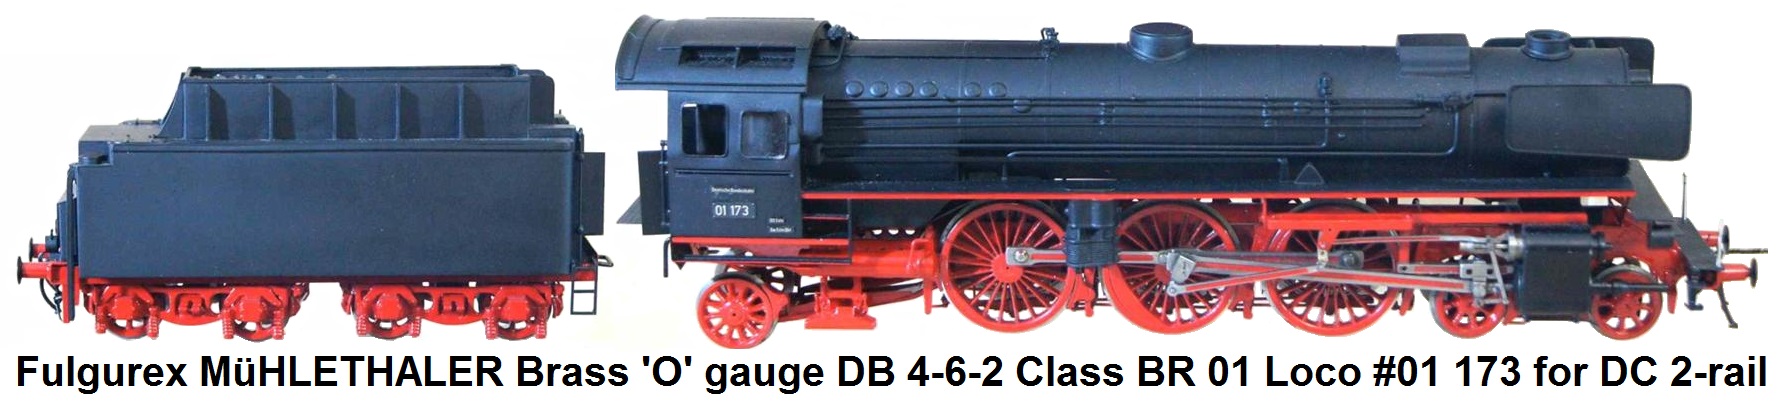 Fulgurex MüHLETHALER Brass 'O' gauge DB 4-6-2 Class BR 01 Loco #01 173 for DC 2-rail